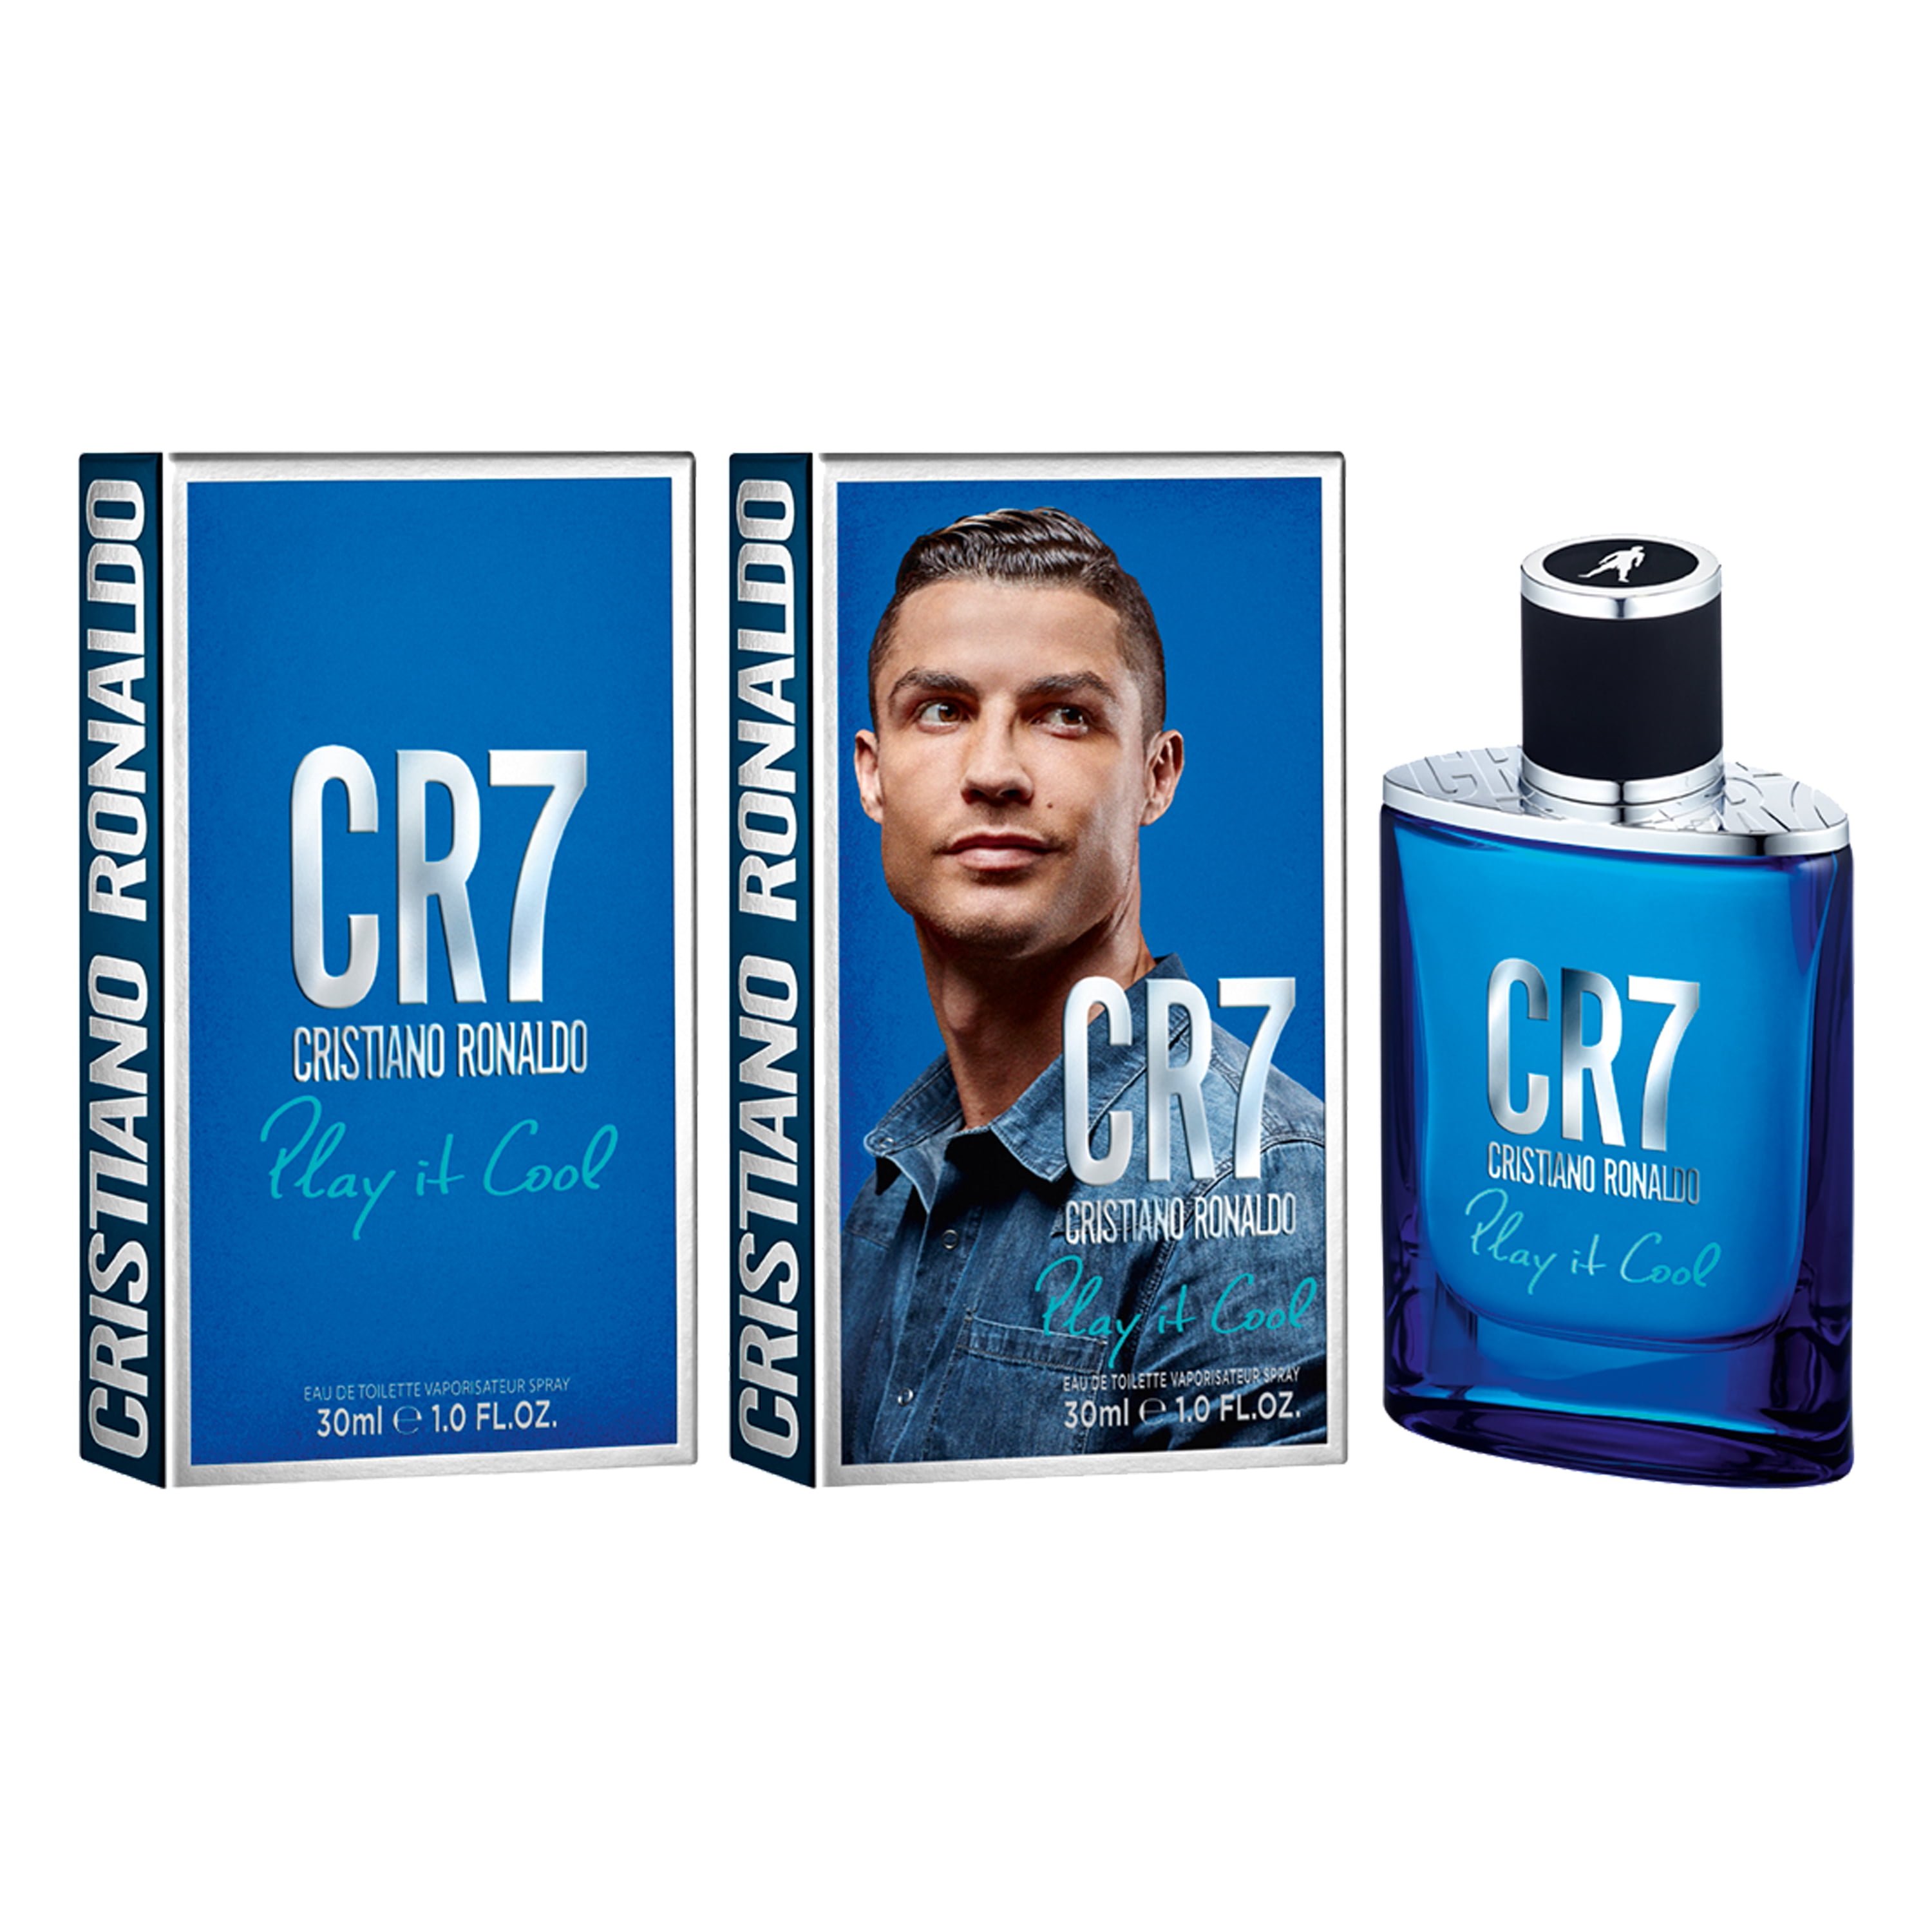 Cristiano Ronaldo CR7 Play It Cool Eau de Toilette Cologne for Men, 1 Oz  Mini \u0026 Travel Size - Walmart.com - Walmart.com